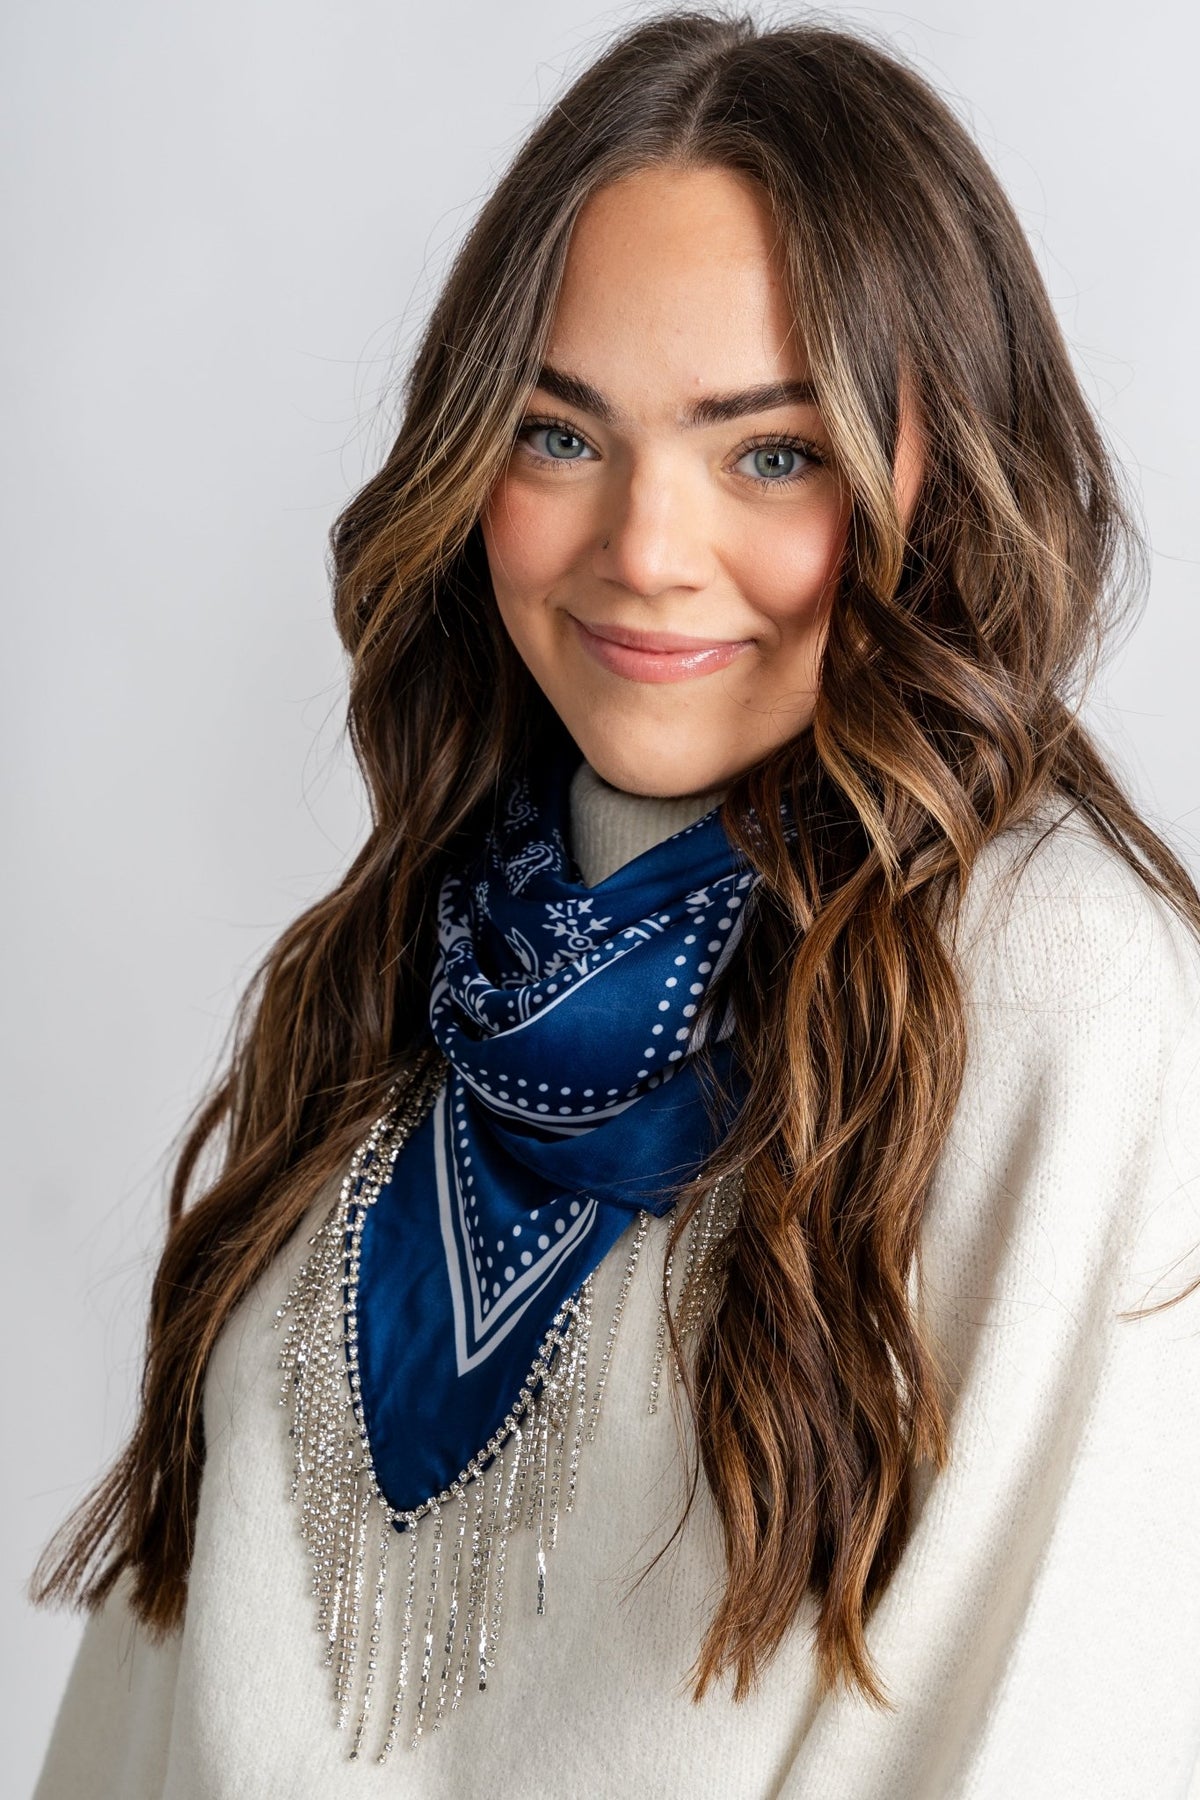 Paisley rhinestone bandana scarf navy - Trendy Scarves at Lush Fashion Lounge Boutique in Oklahoma City